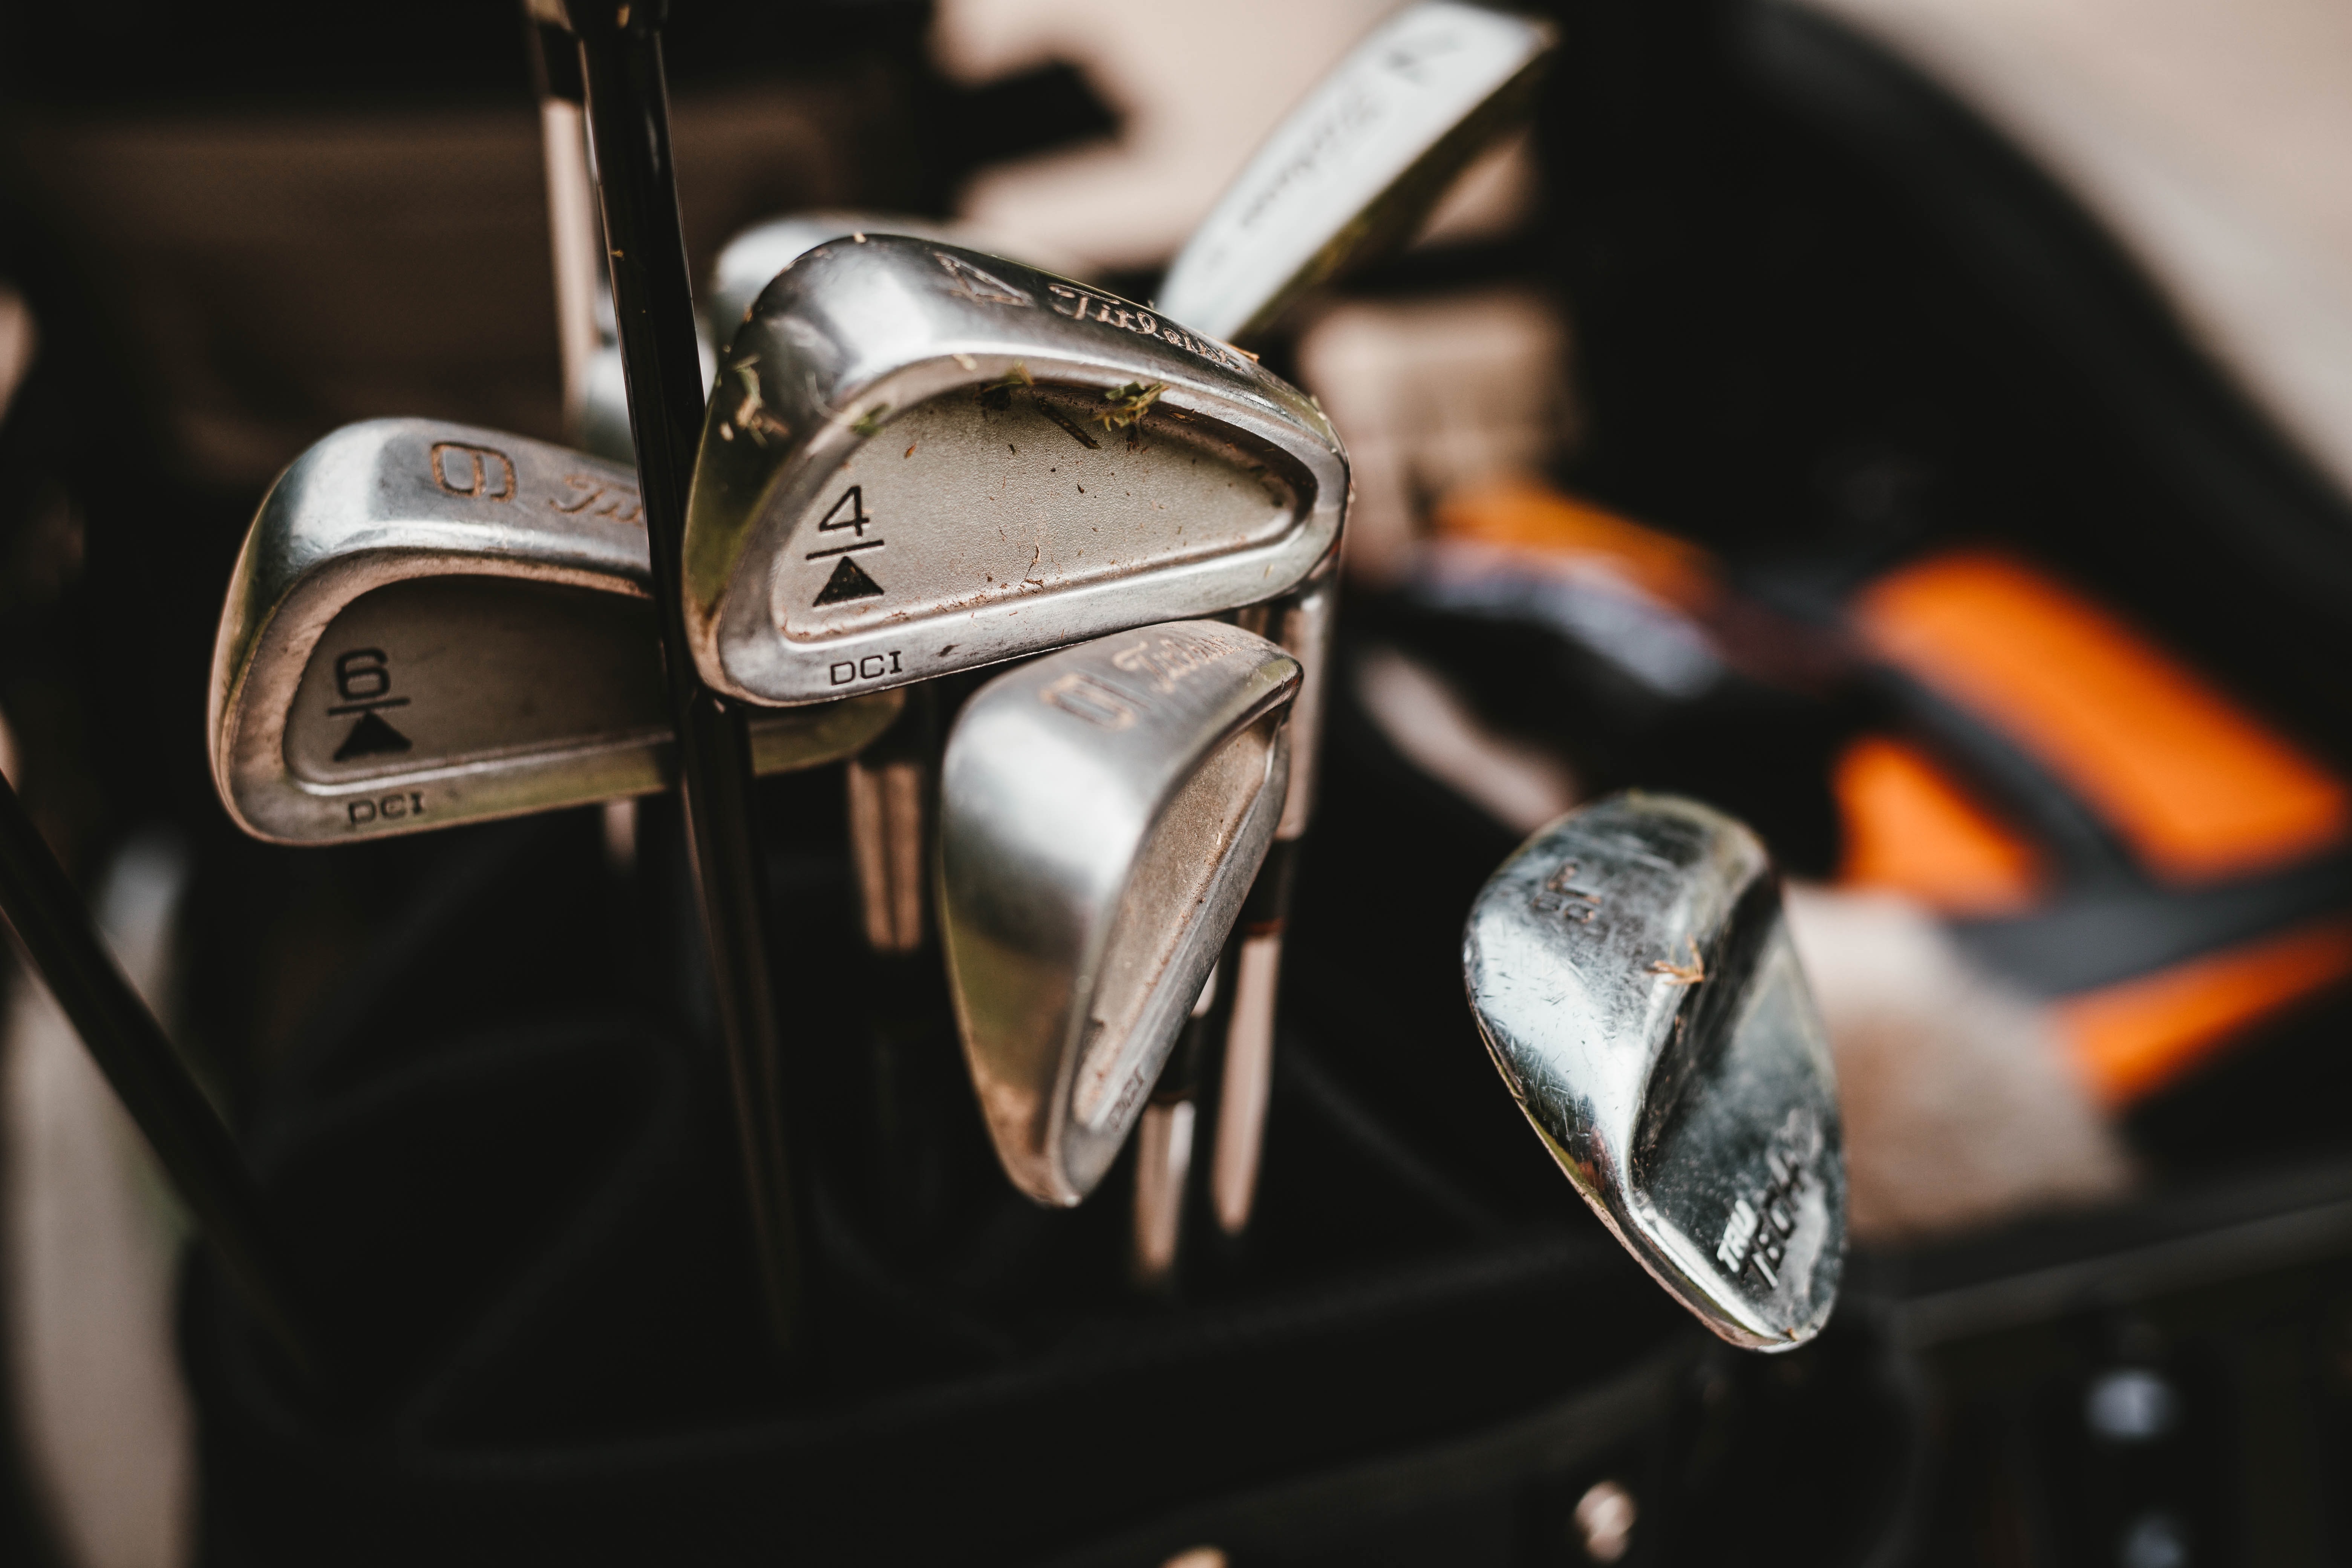 Tweedehands golfclubs: waar koop je die en waar moet je op letten? •